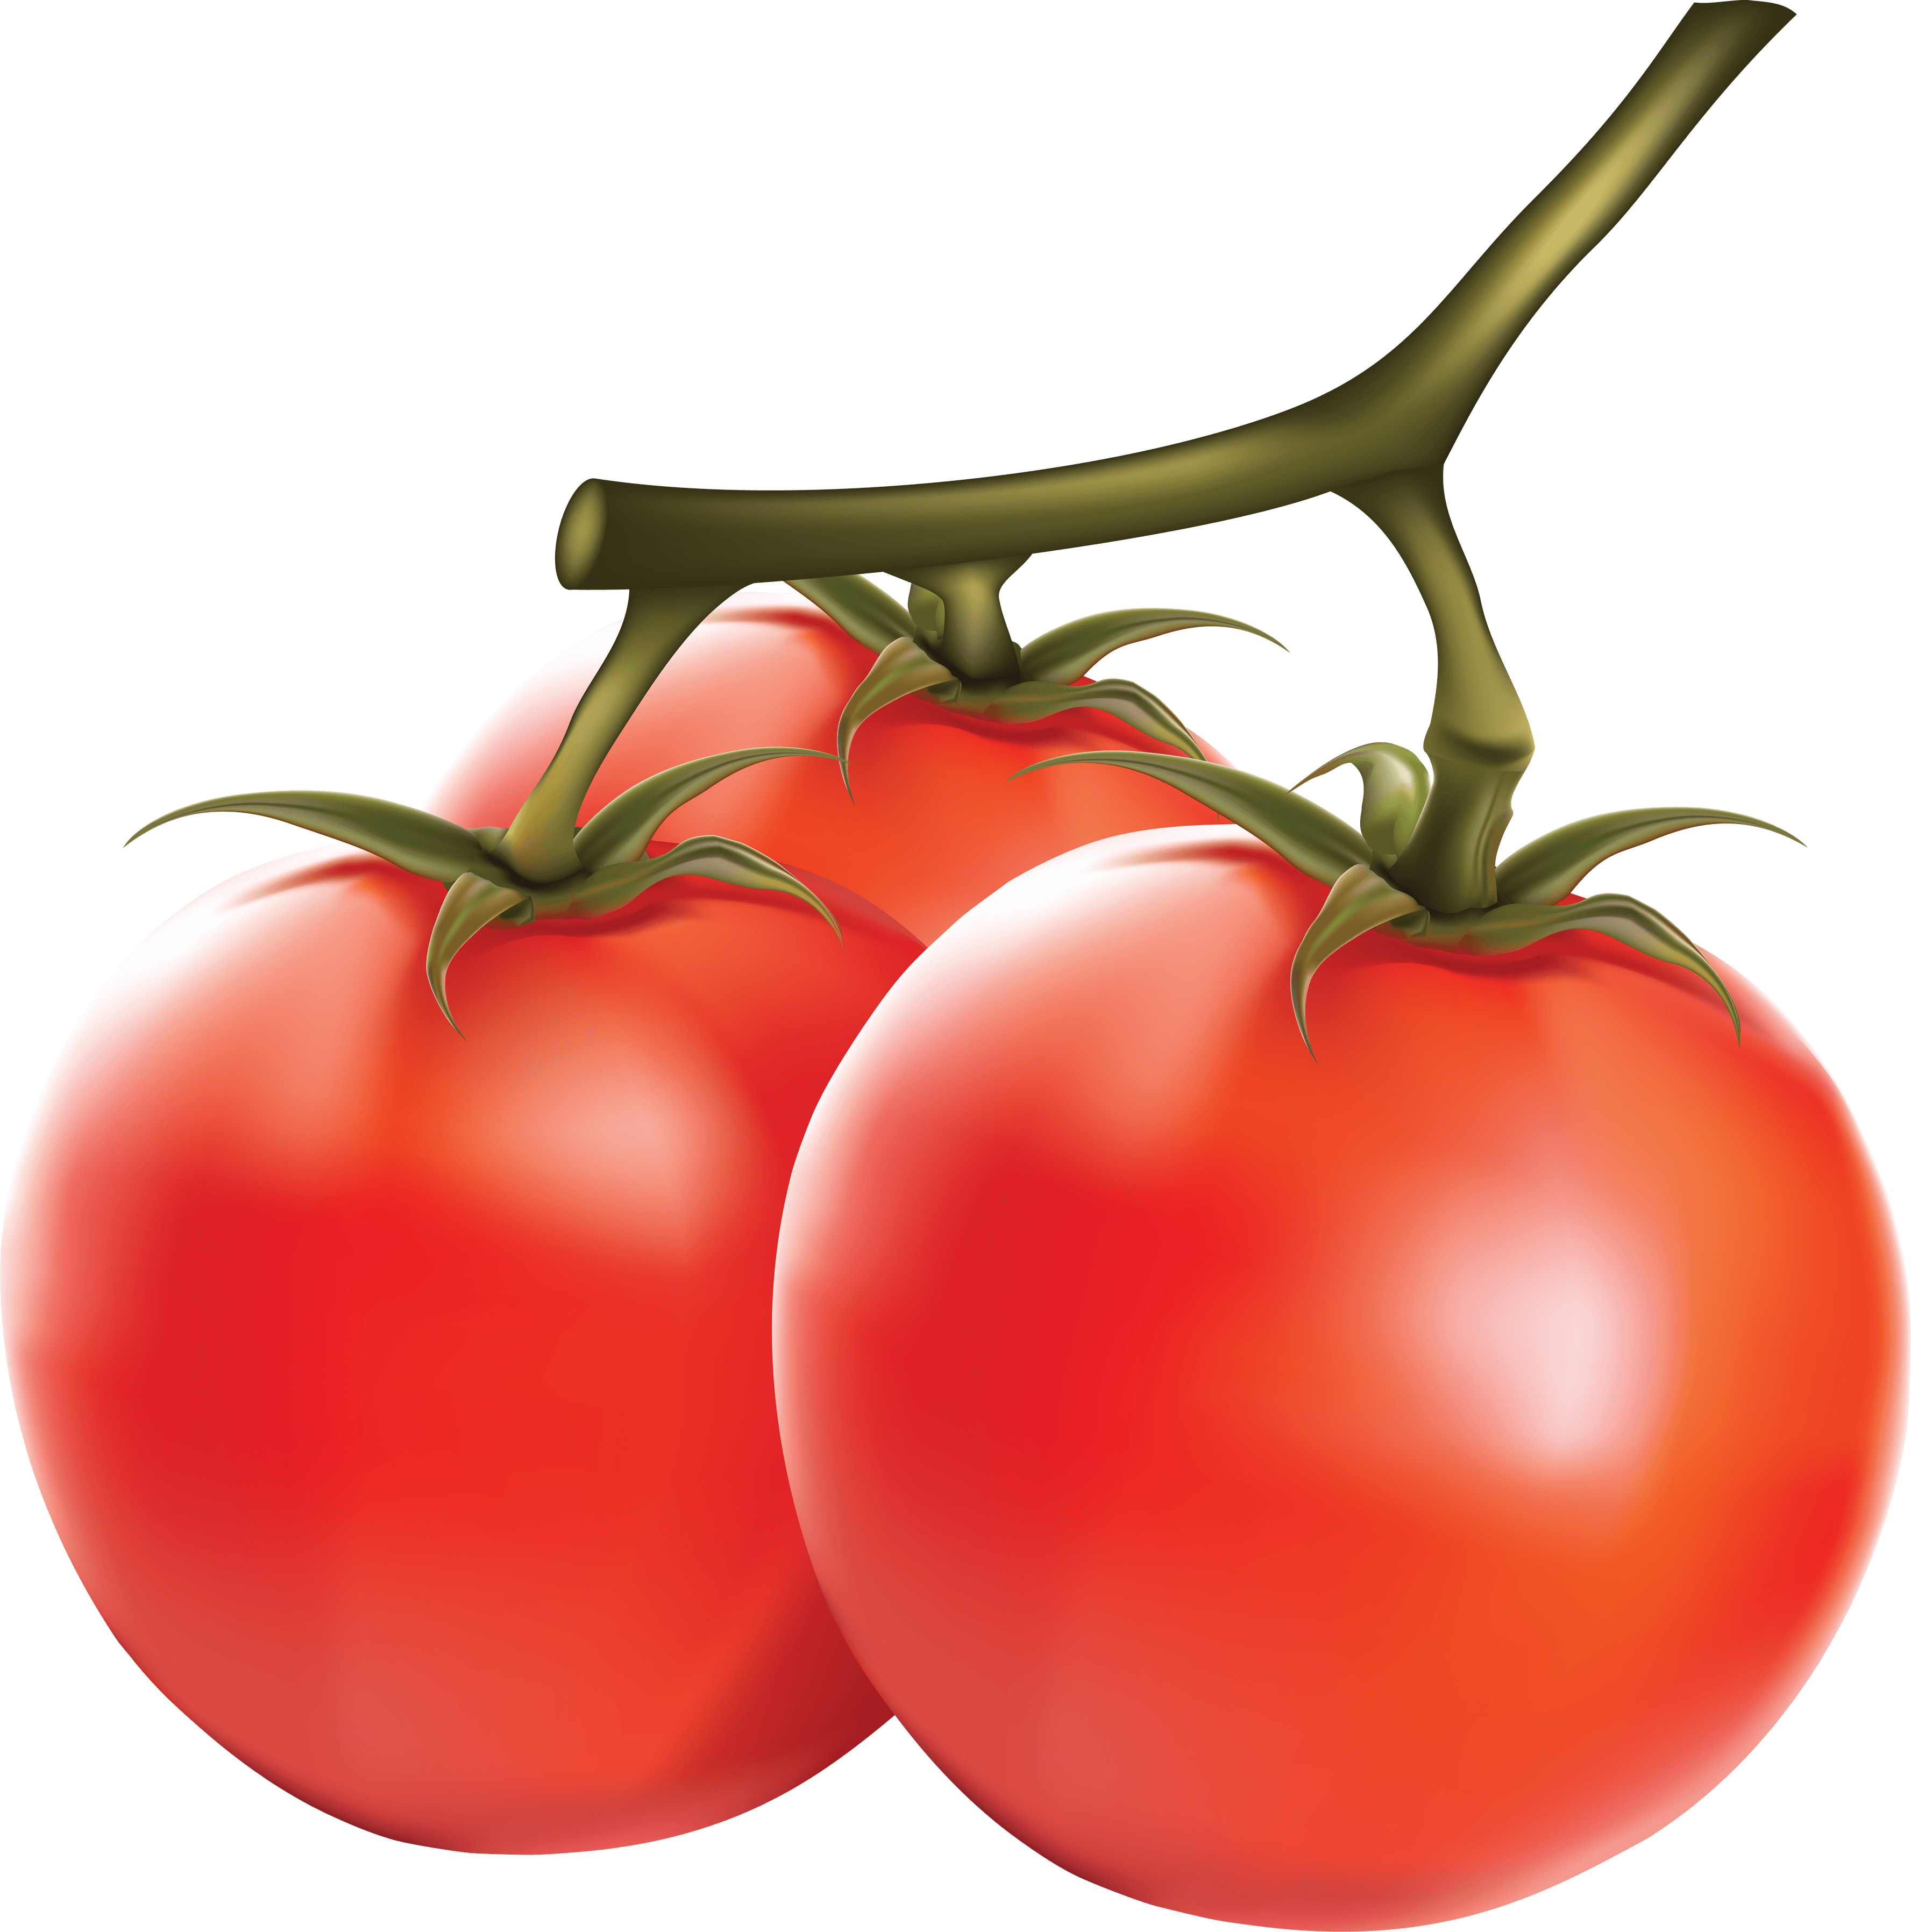 download tomato png image png image pngimg #15539